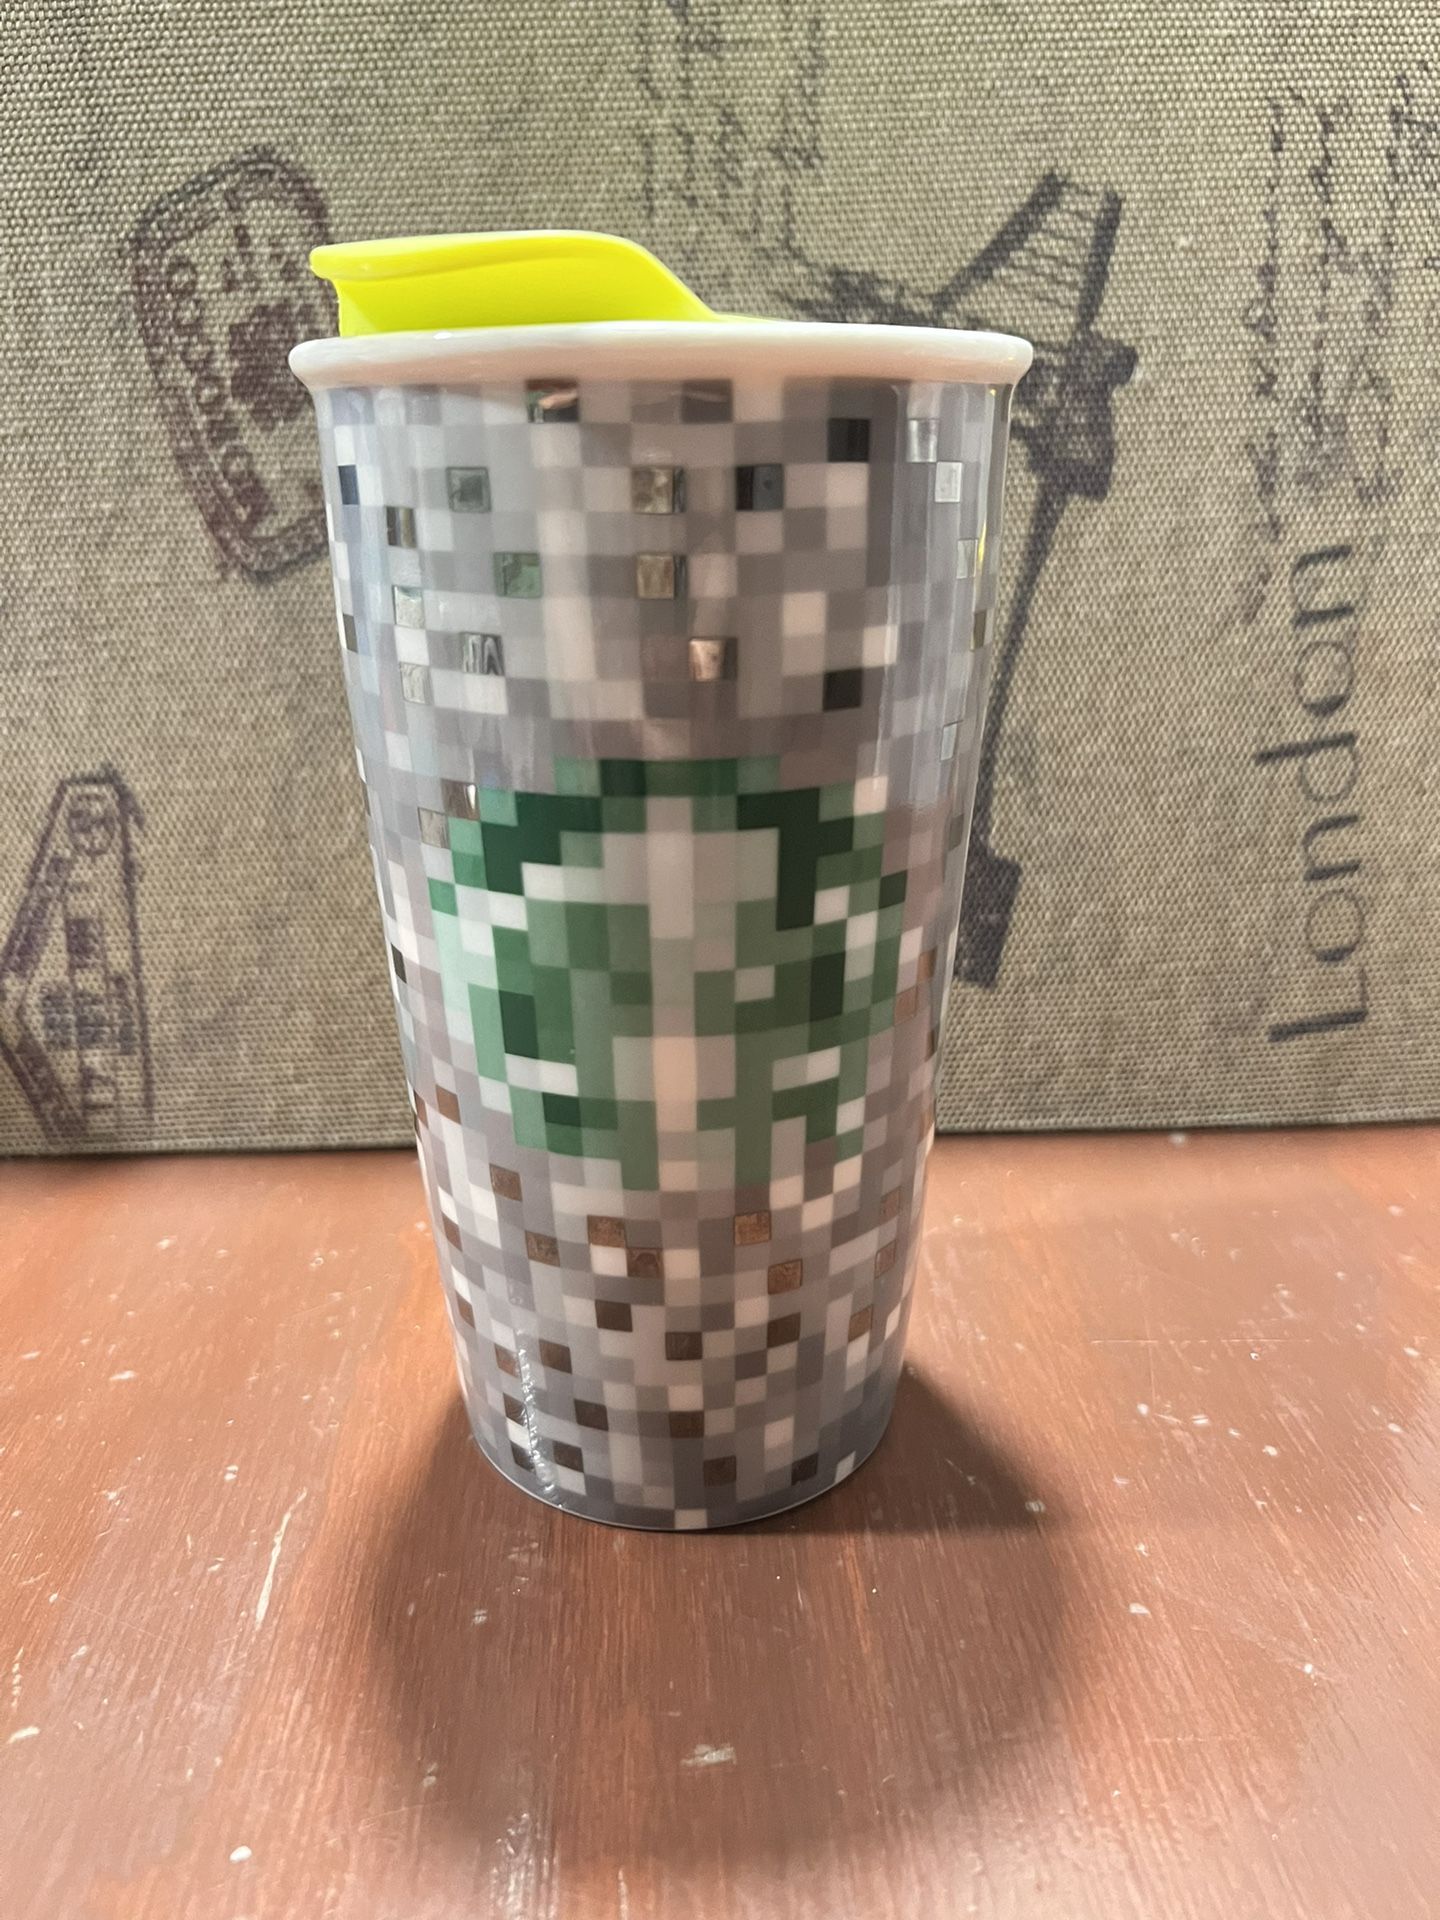  Rodarte Starbucks Pixel Mug - 12oz